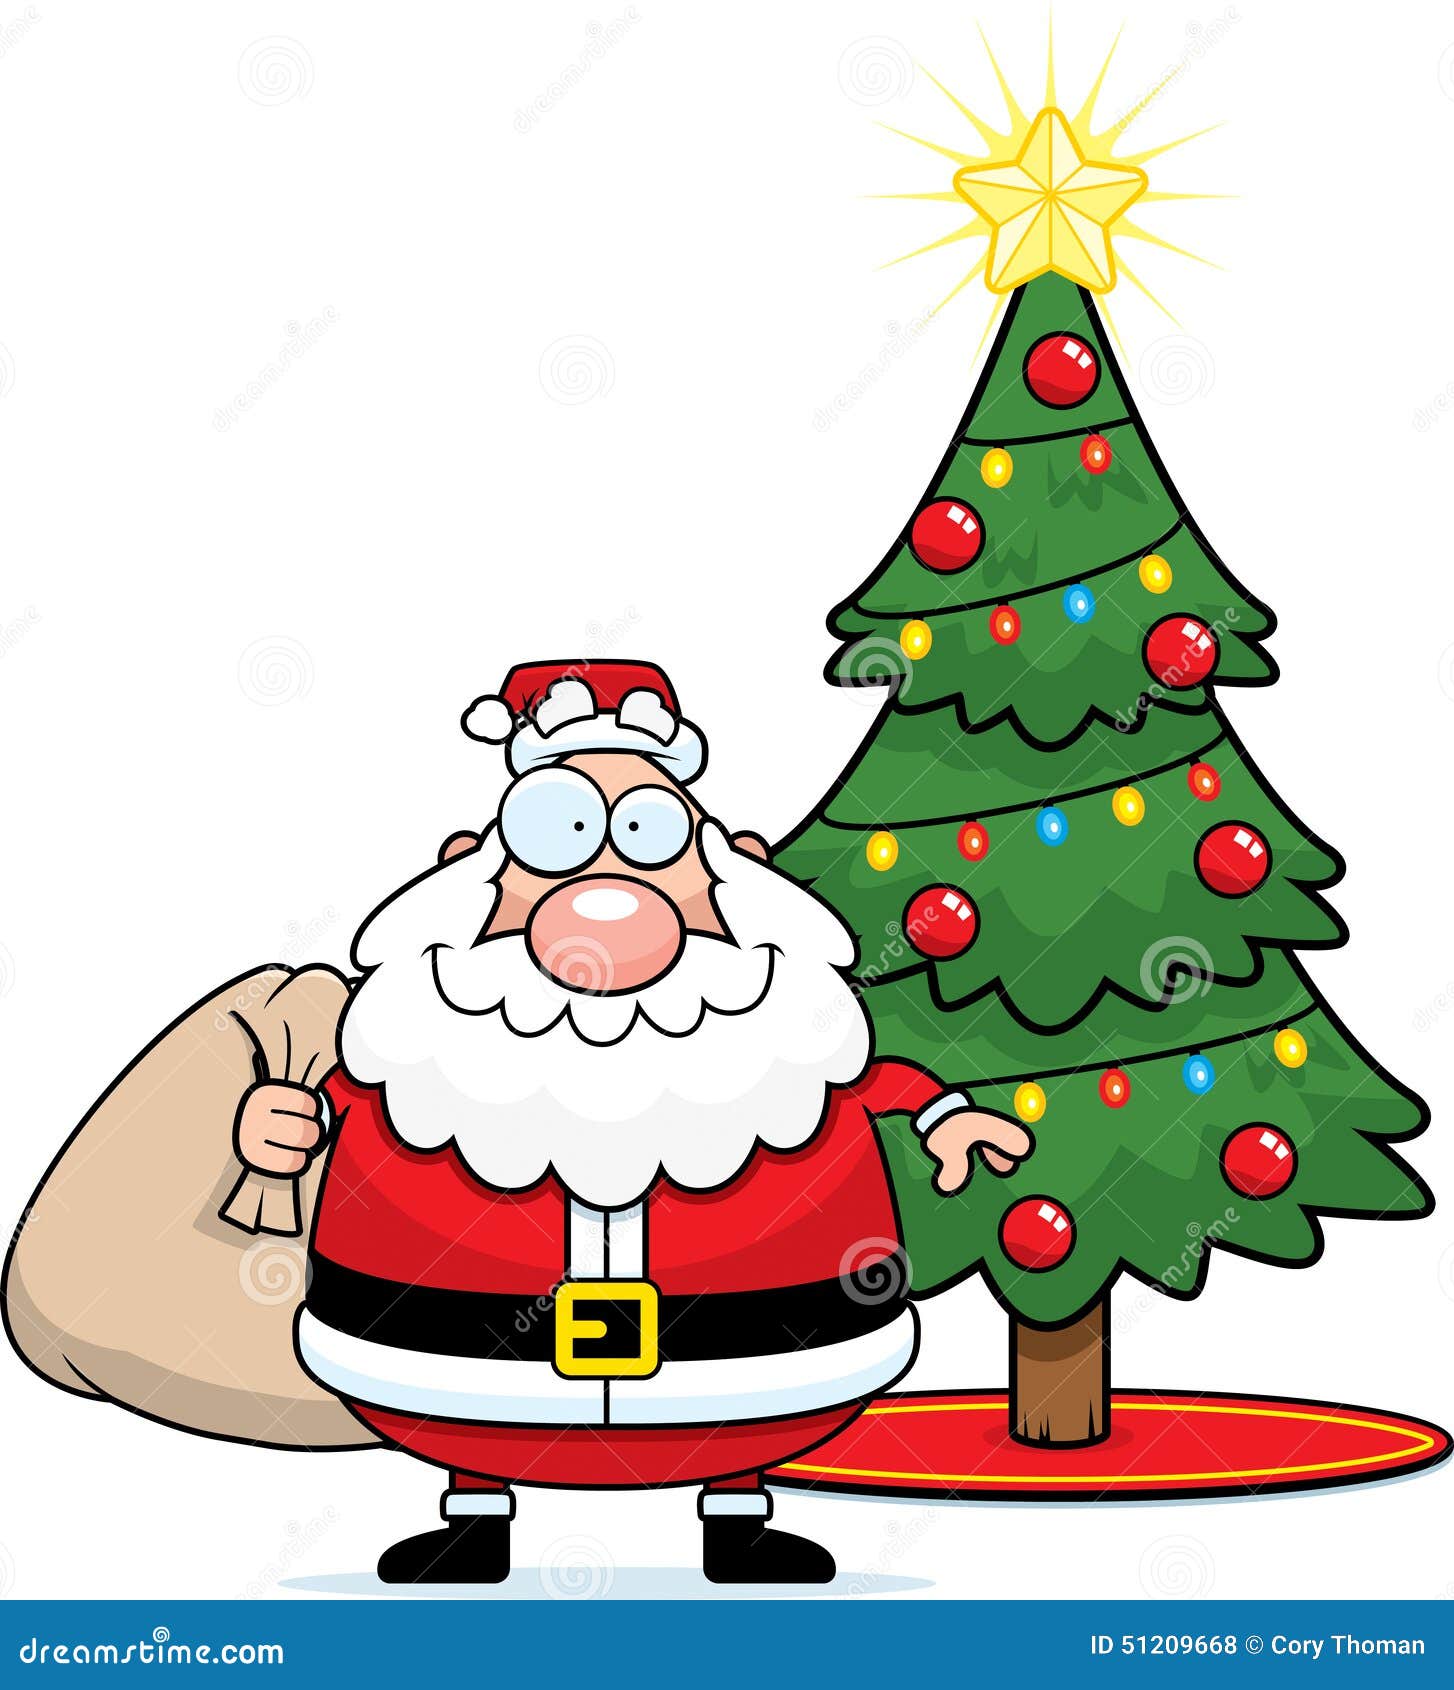 Cartoon Santa Claus Christmas Tree Stock Vector - Illustration of beard,  happy: 51209668